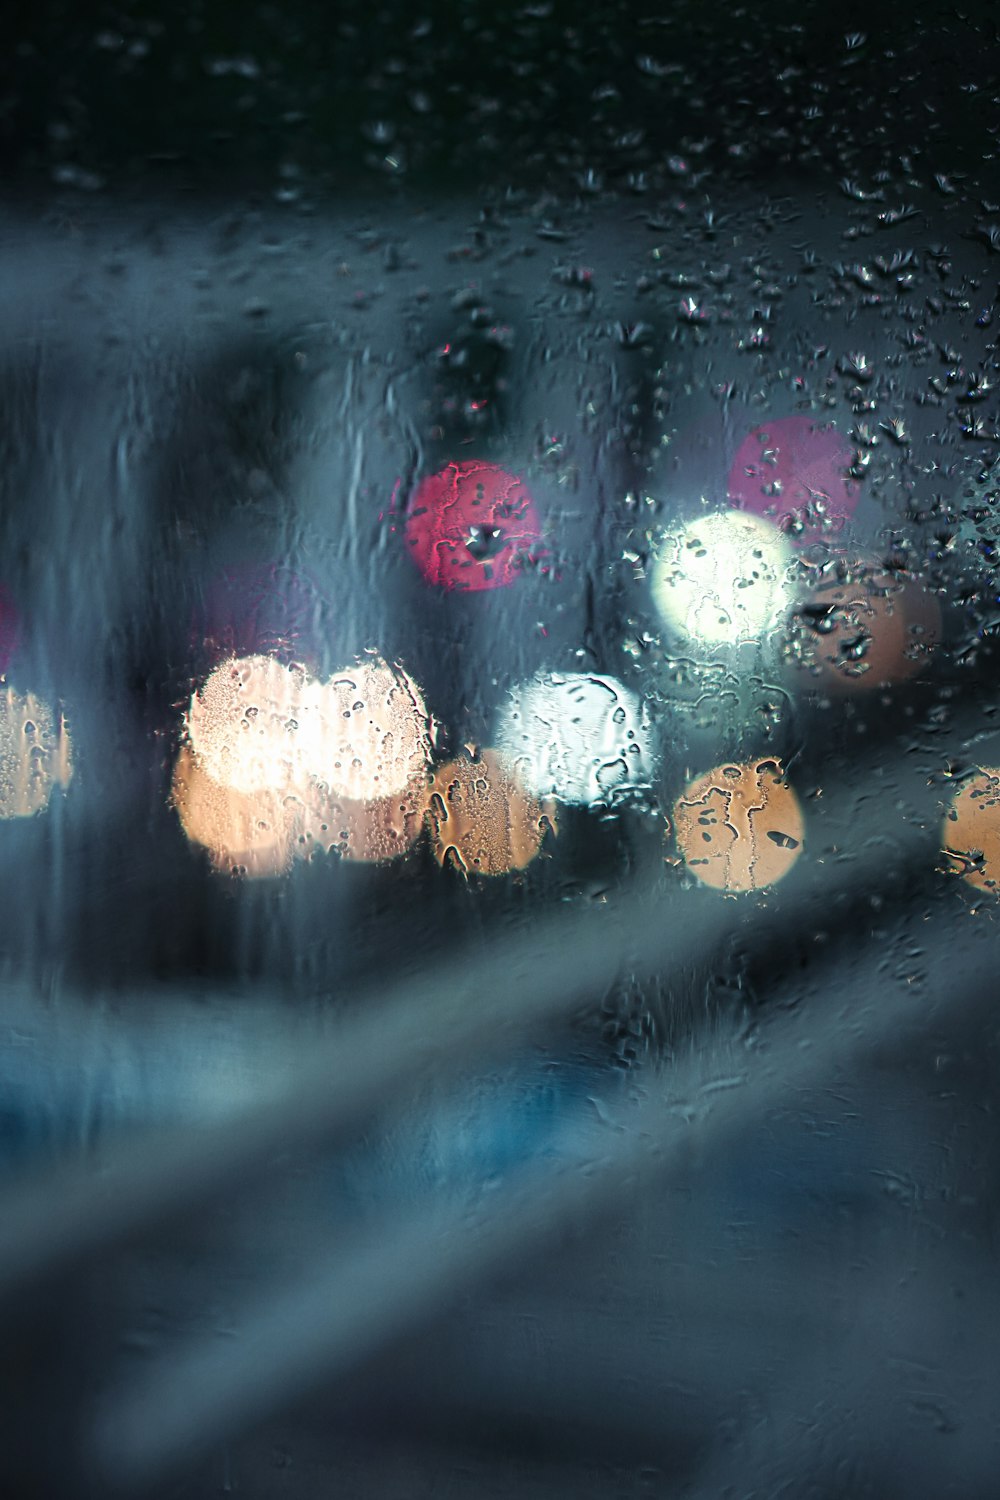 a view of a city street through a rain covered window